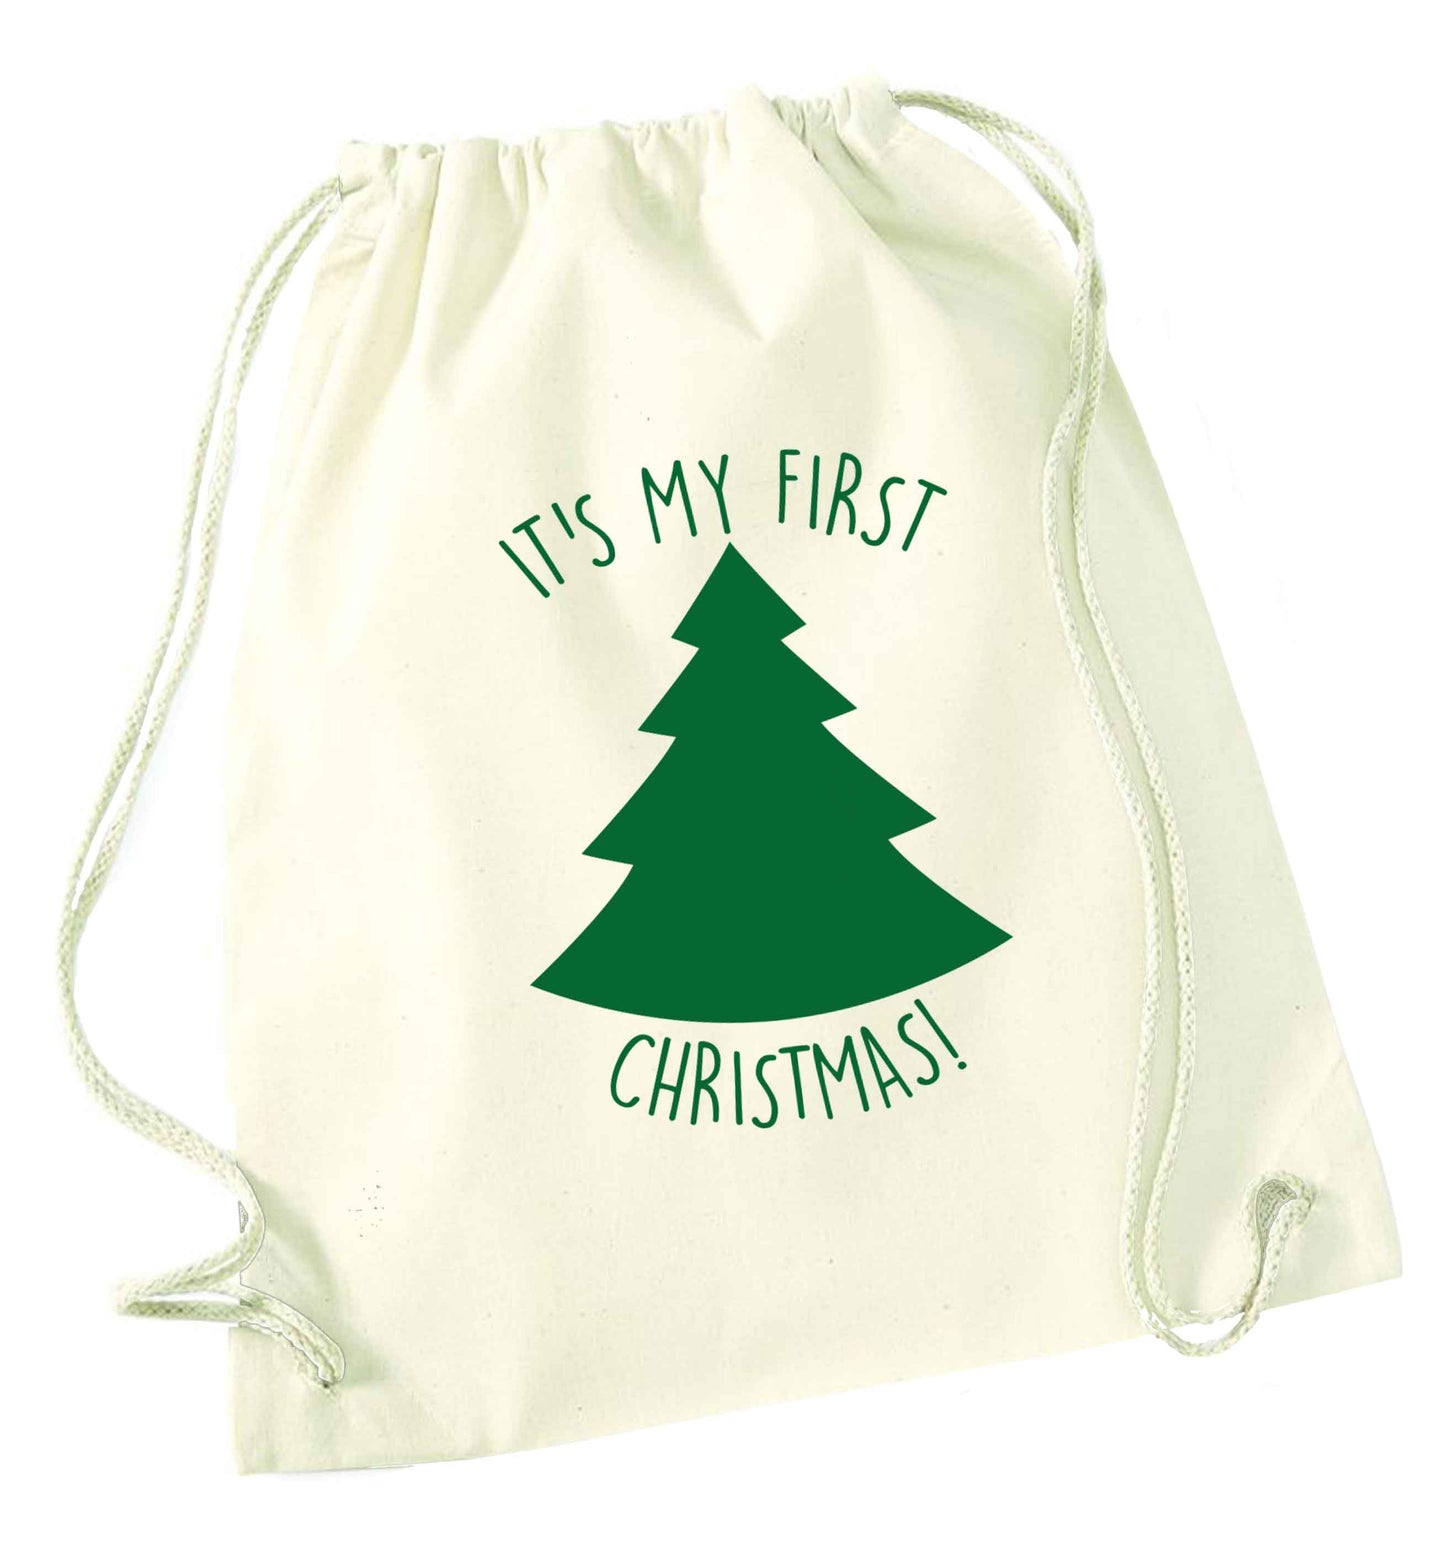 It's my first Christmas - tree natural drawstring bag